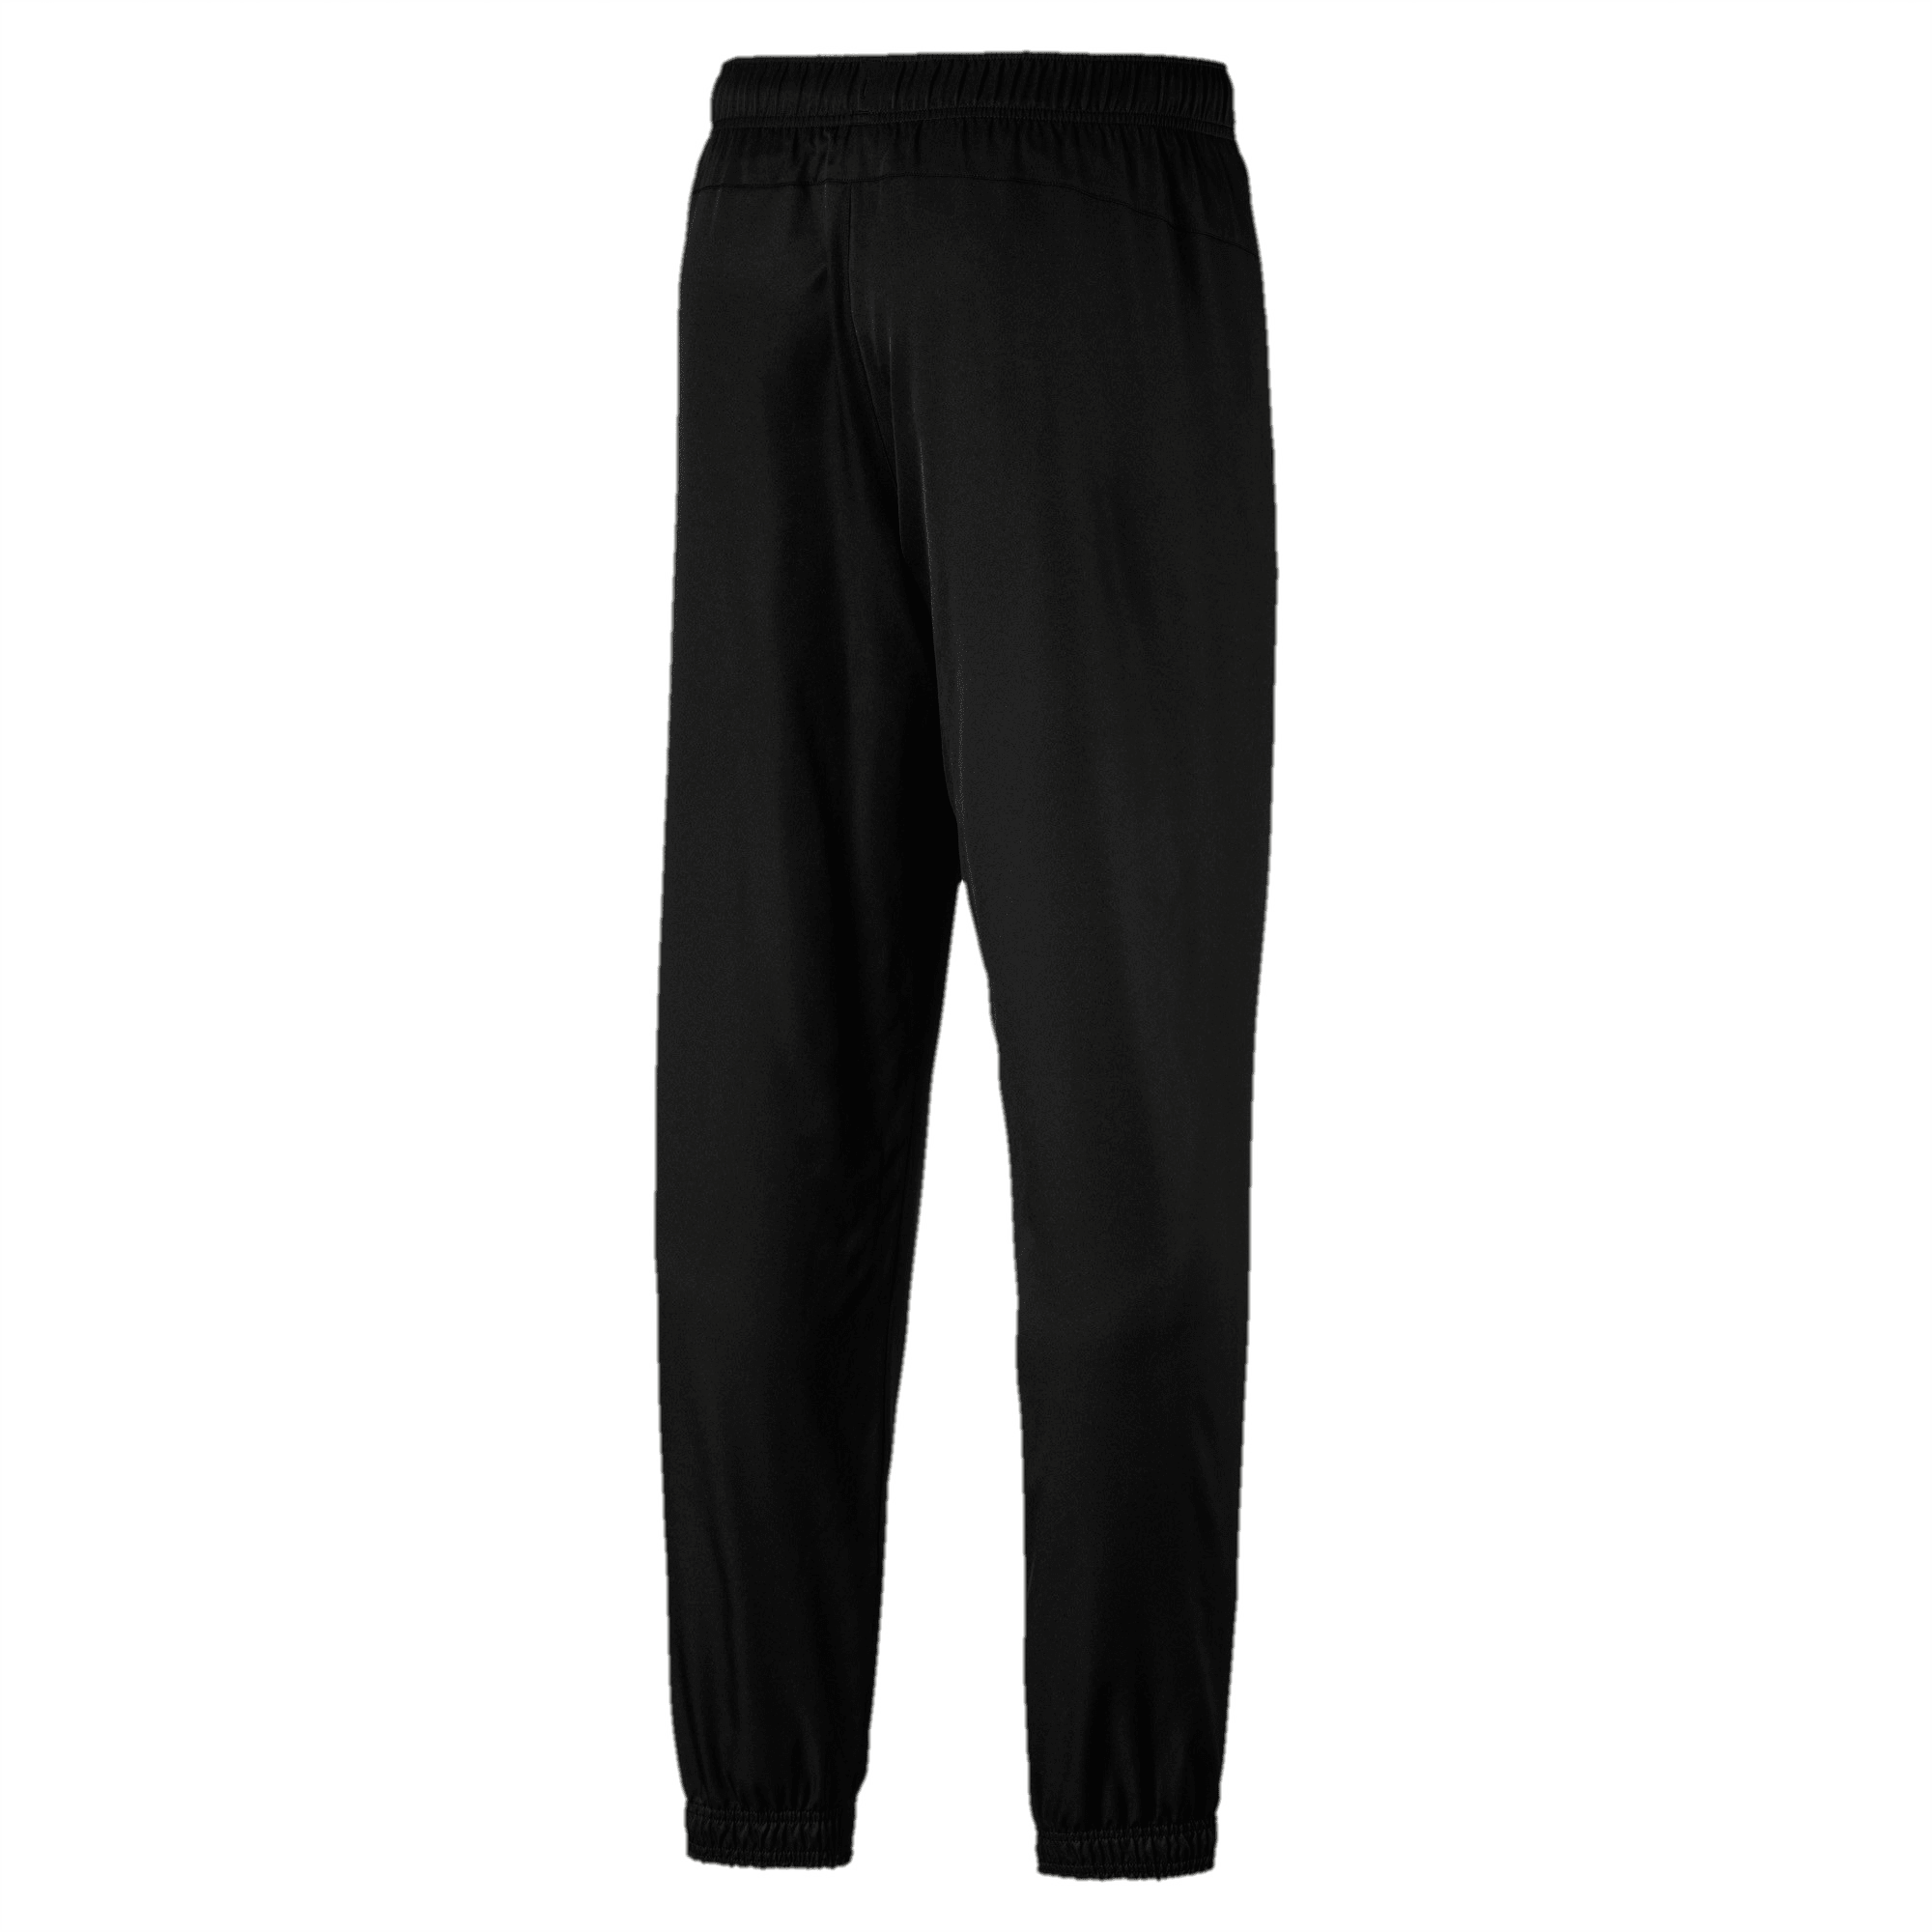 Quần Dài Chính Hãng - Puma Active Woven Men's Sweatpants 'Black' - 851707-01